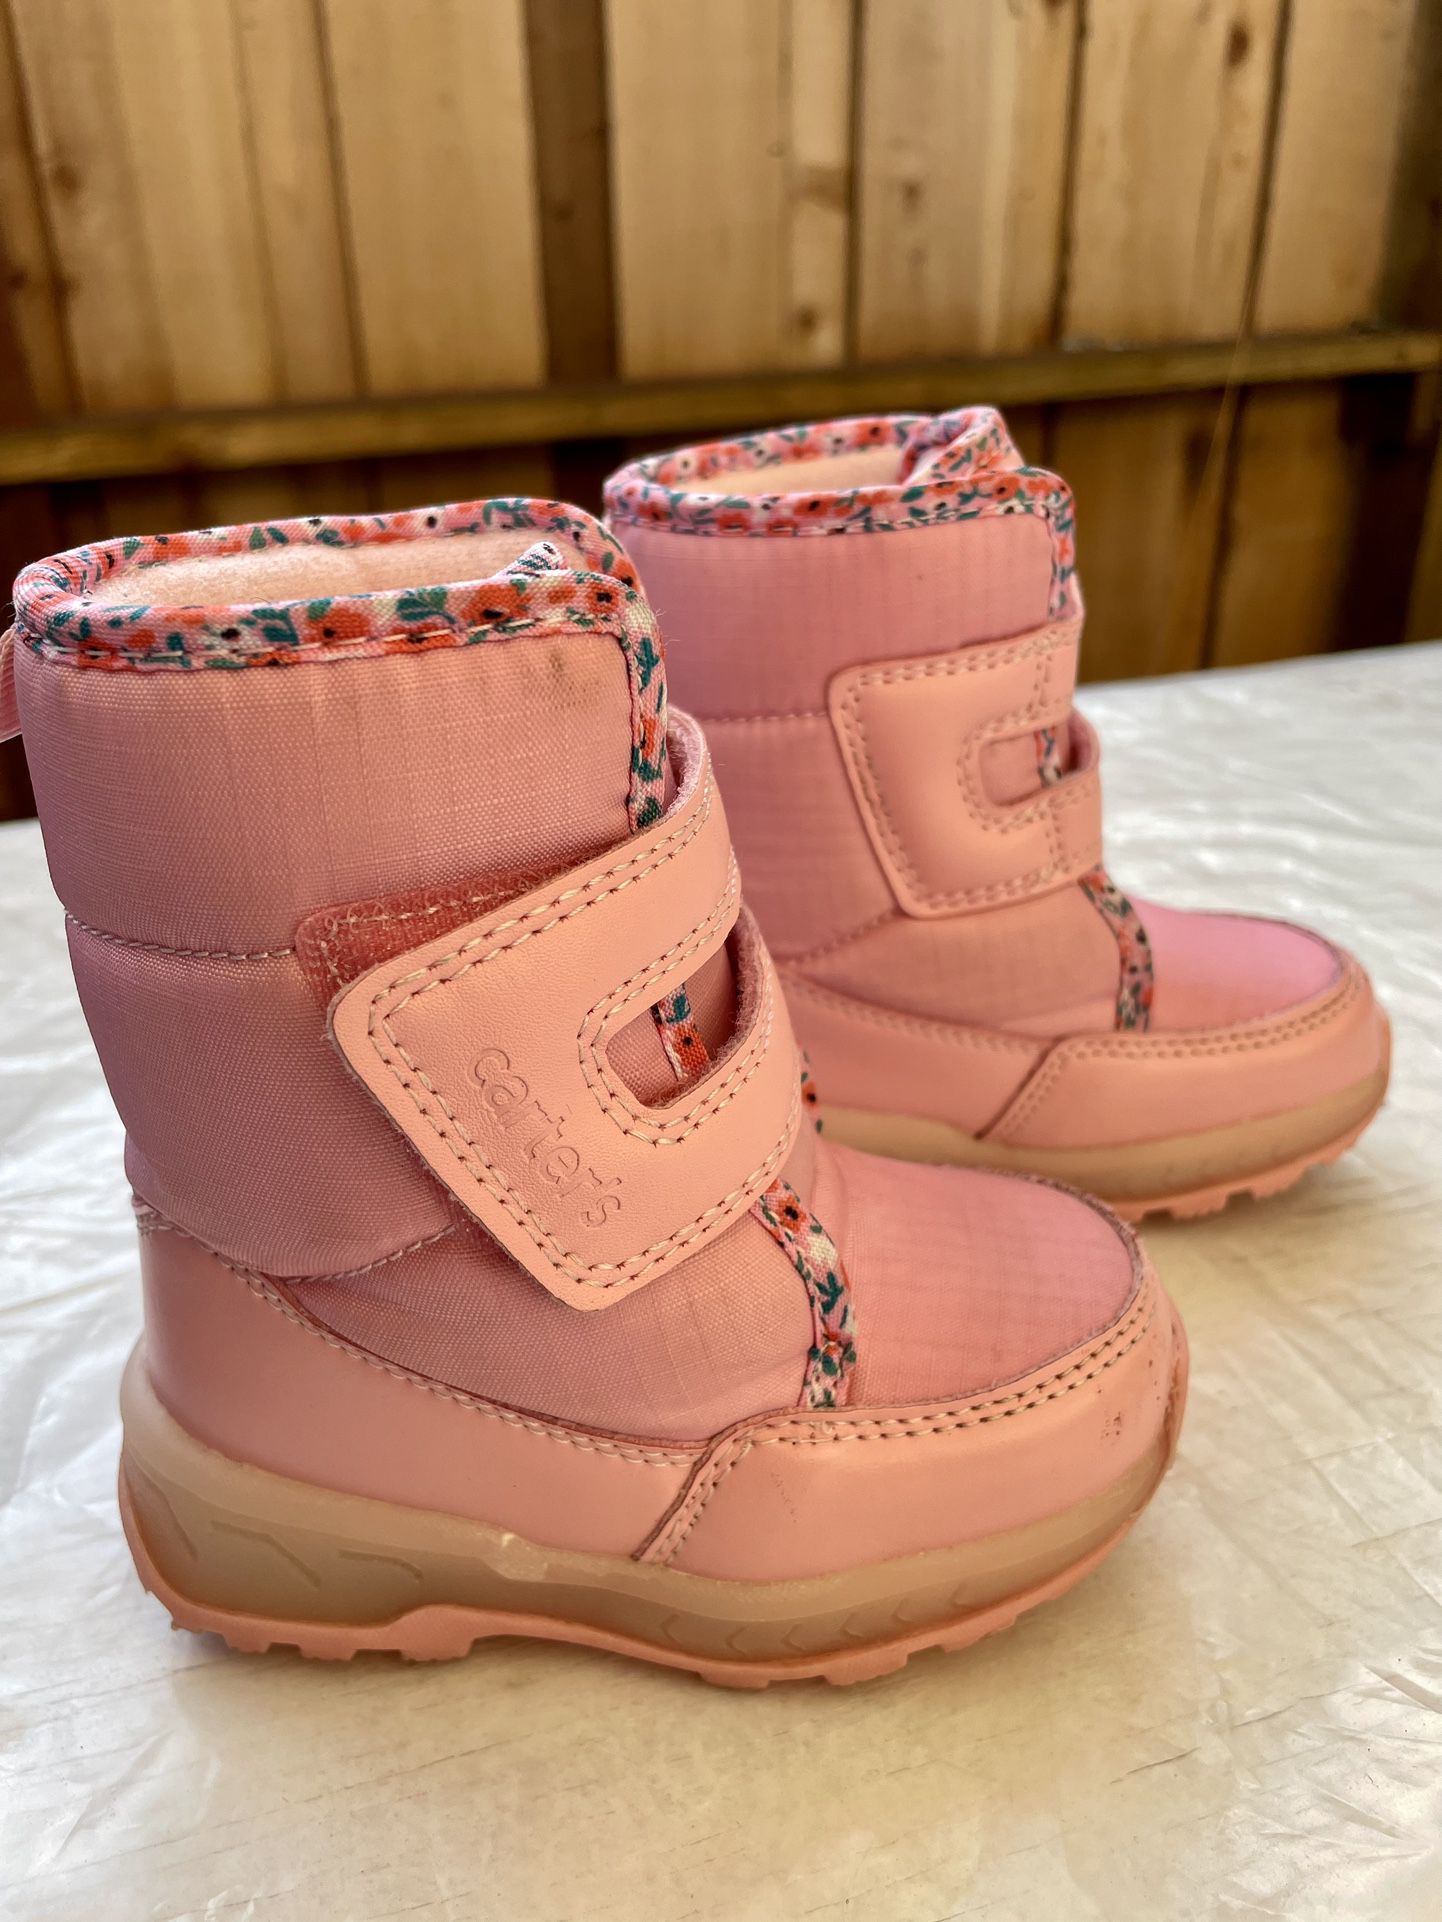 Pink Light Up Snow Boots, Toddler 5